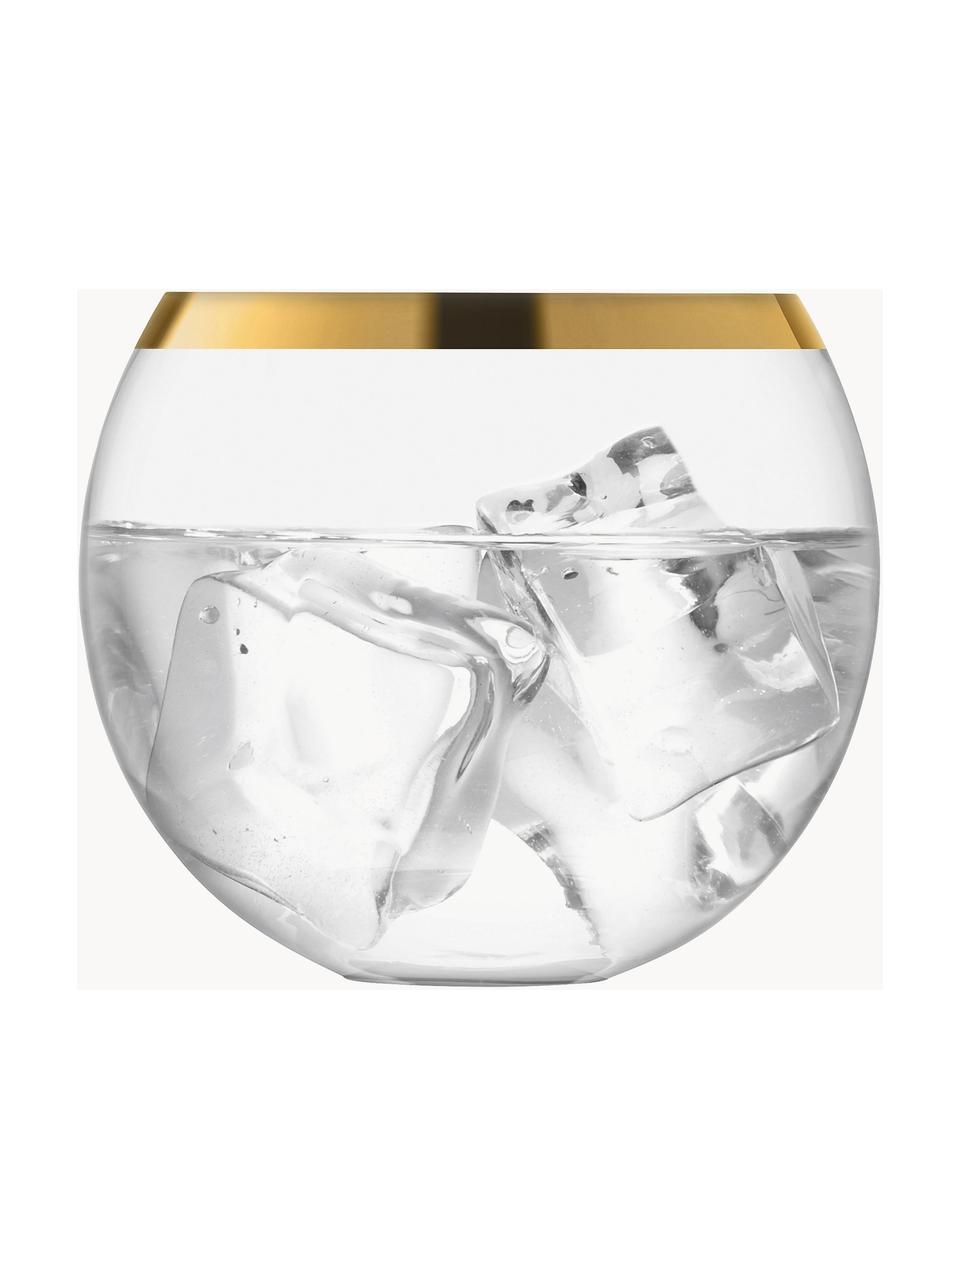 Bicchiere cocktail in vetro soffiato Luca 2 pz, Vetro, Trasparente, dorato, Ø 9 x Alt. 8 cm, 330 ml